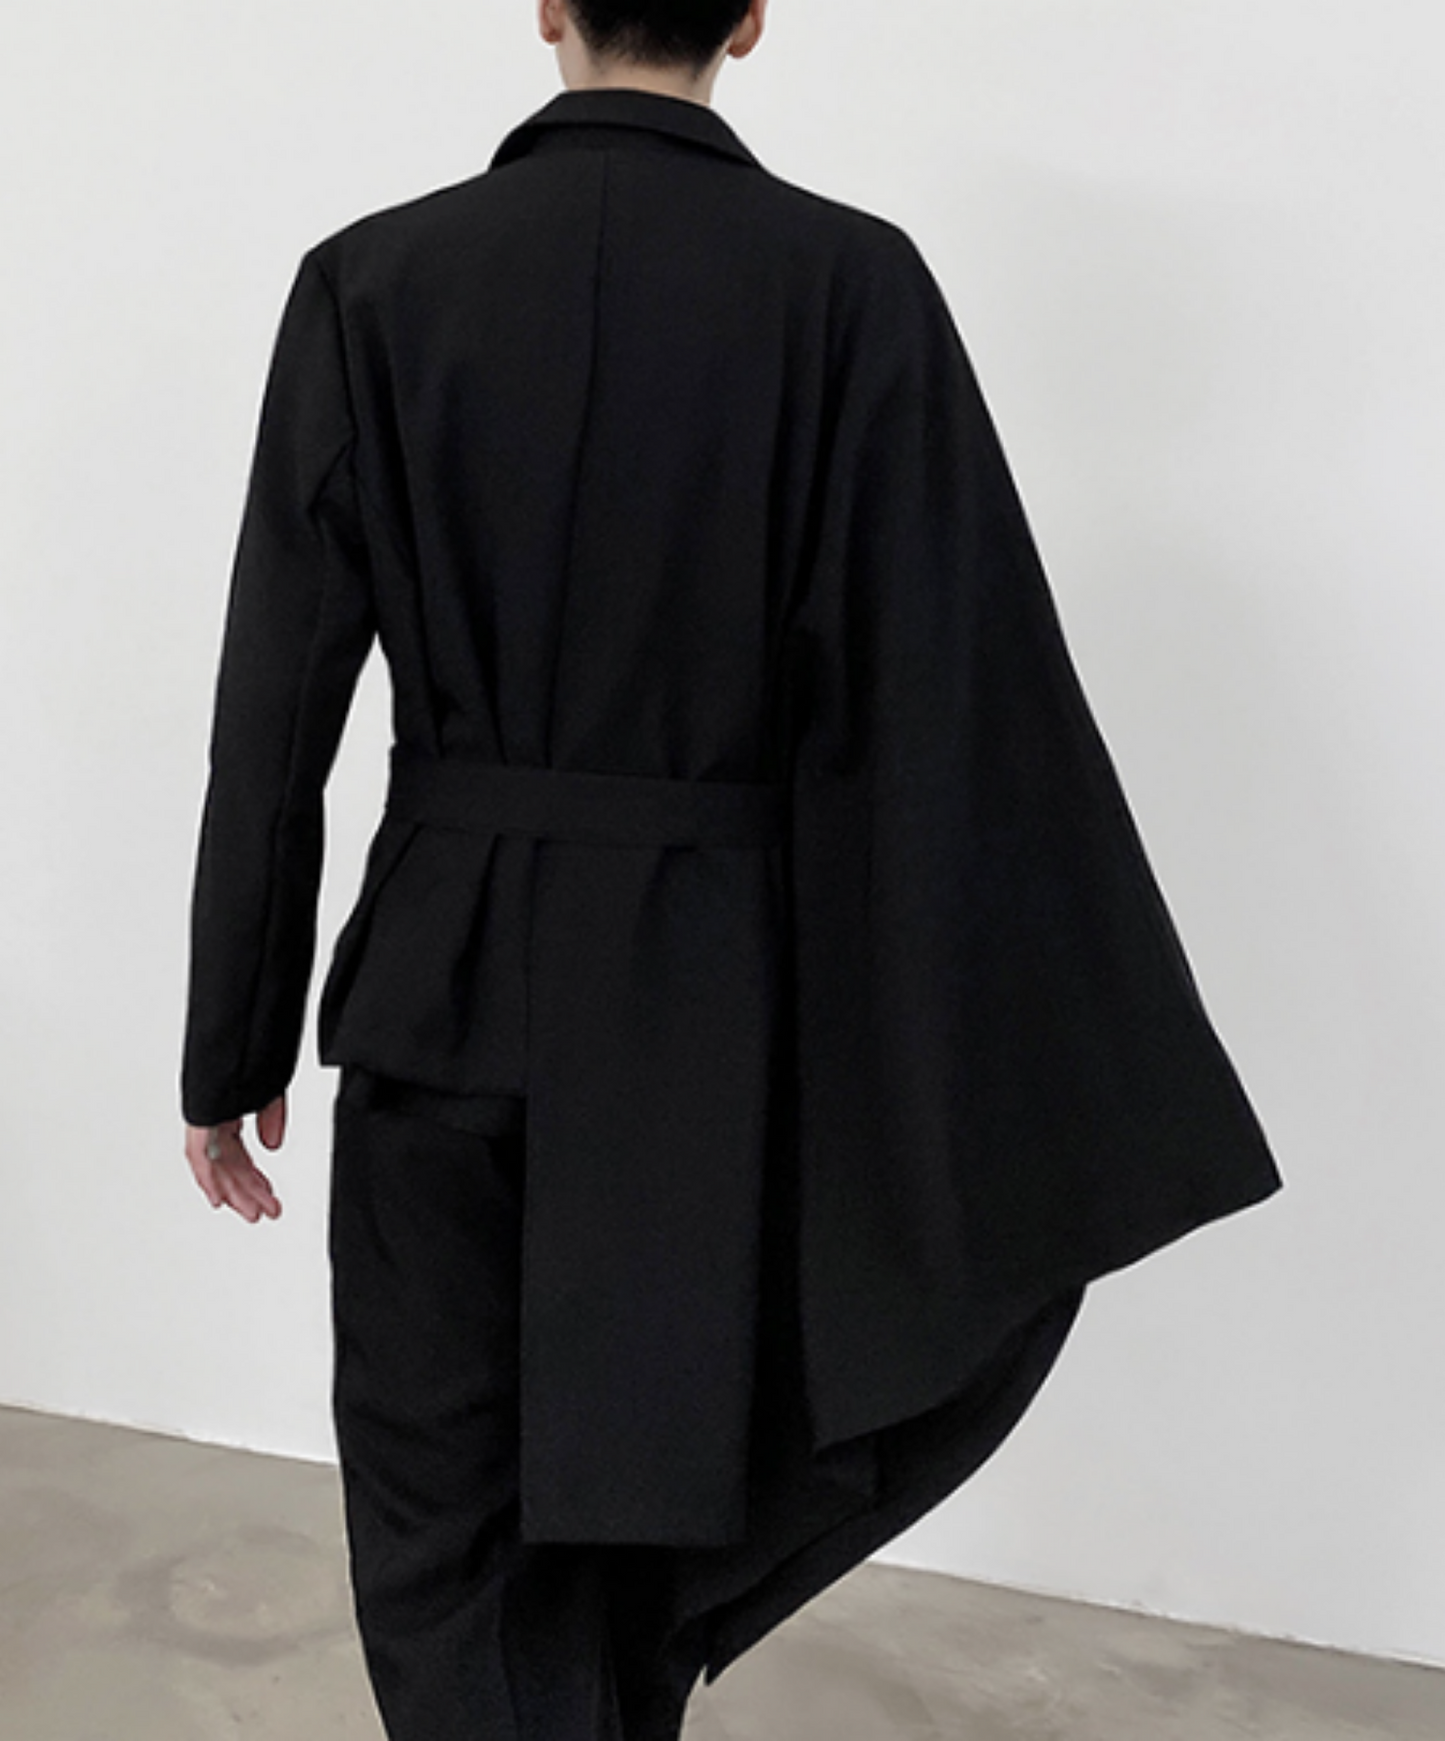 【style10】dark mode outfit set EN826（jacket + pants set）